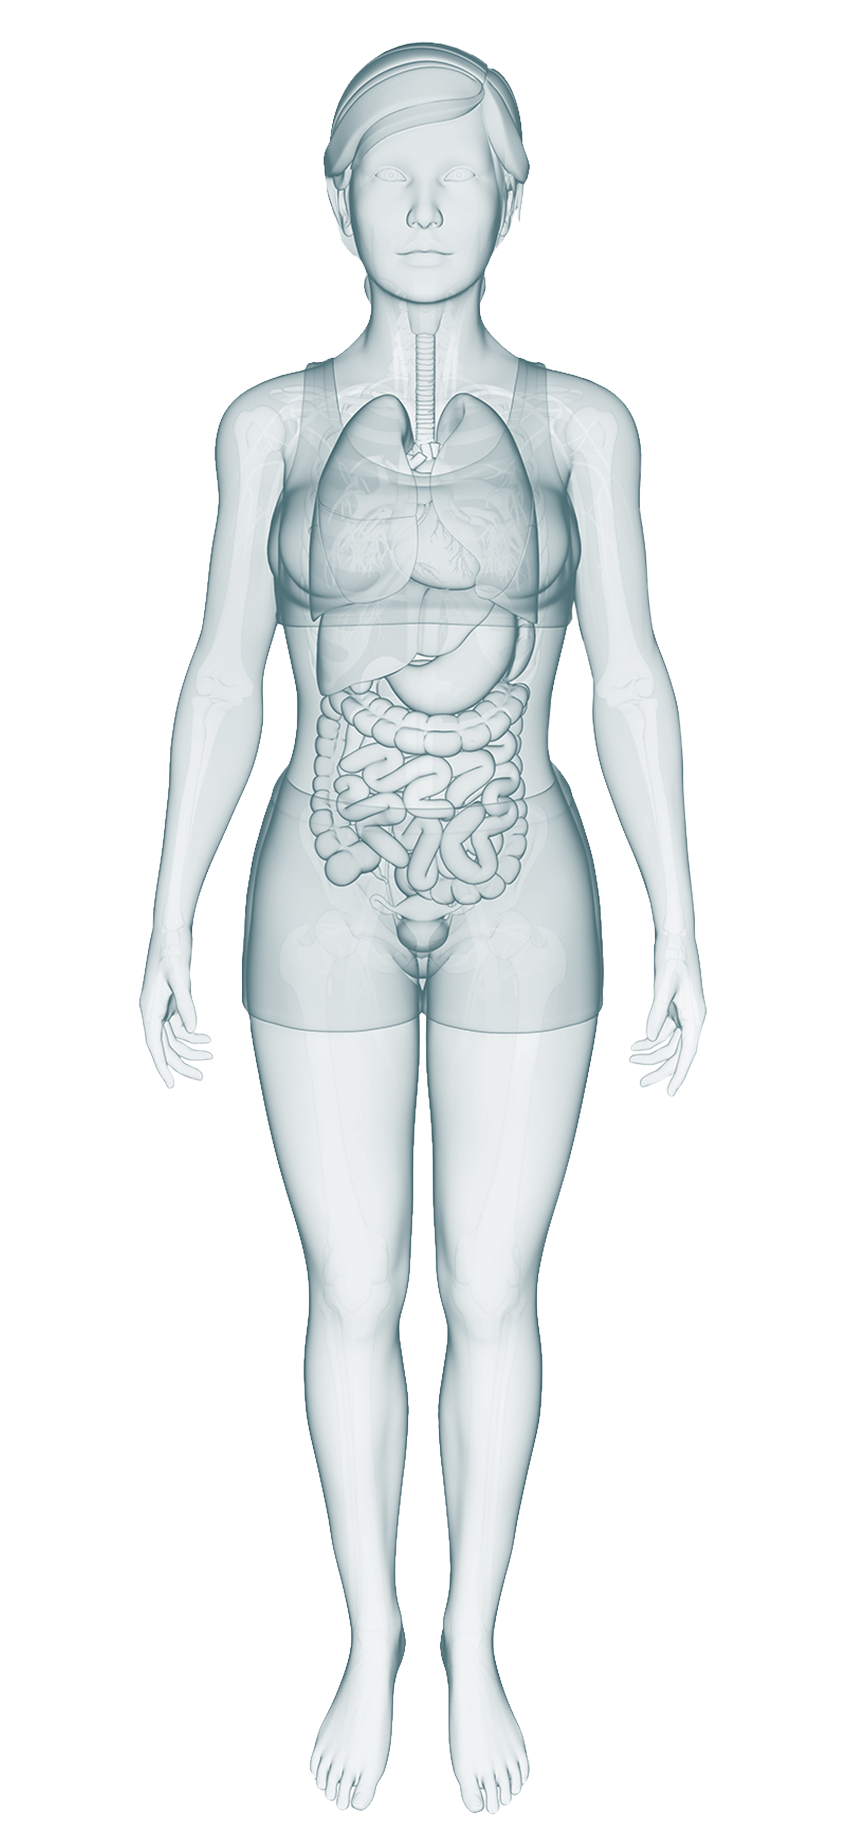 body map female image showing major organs